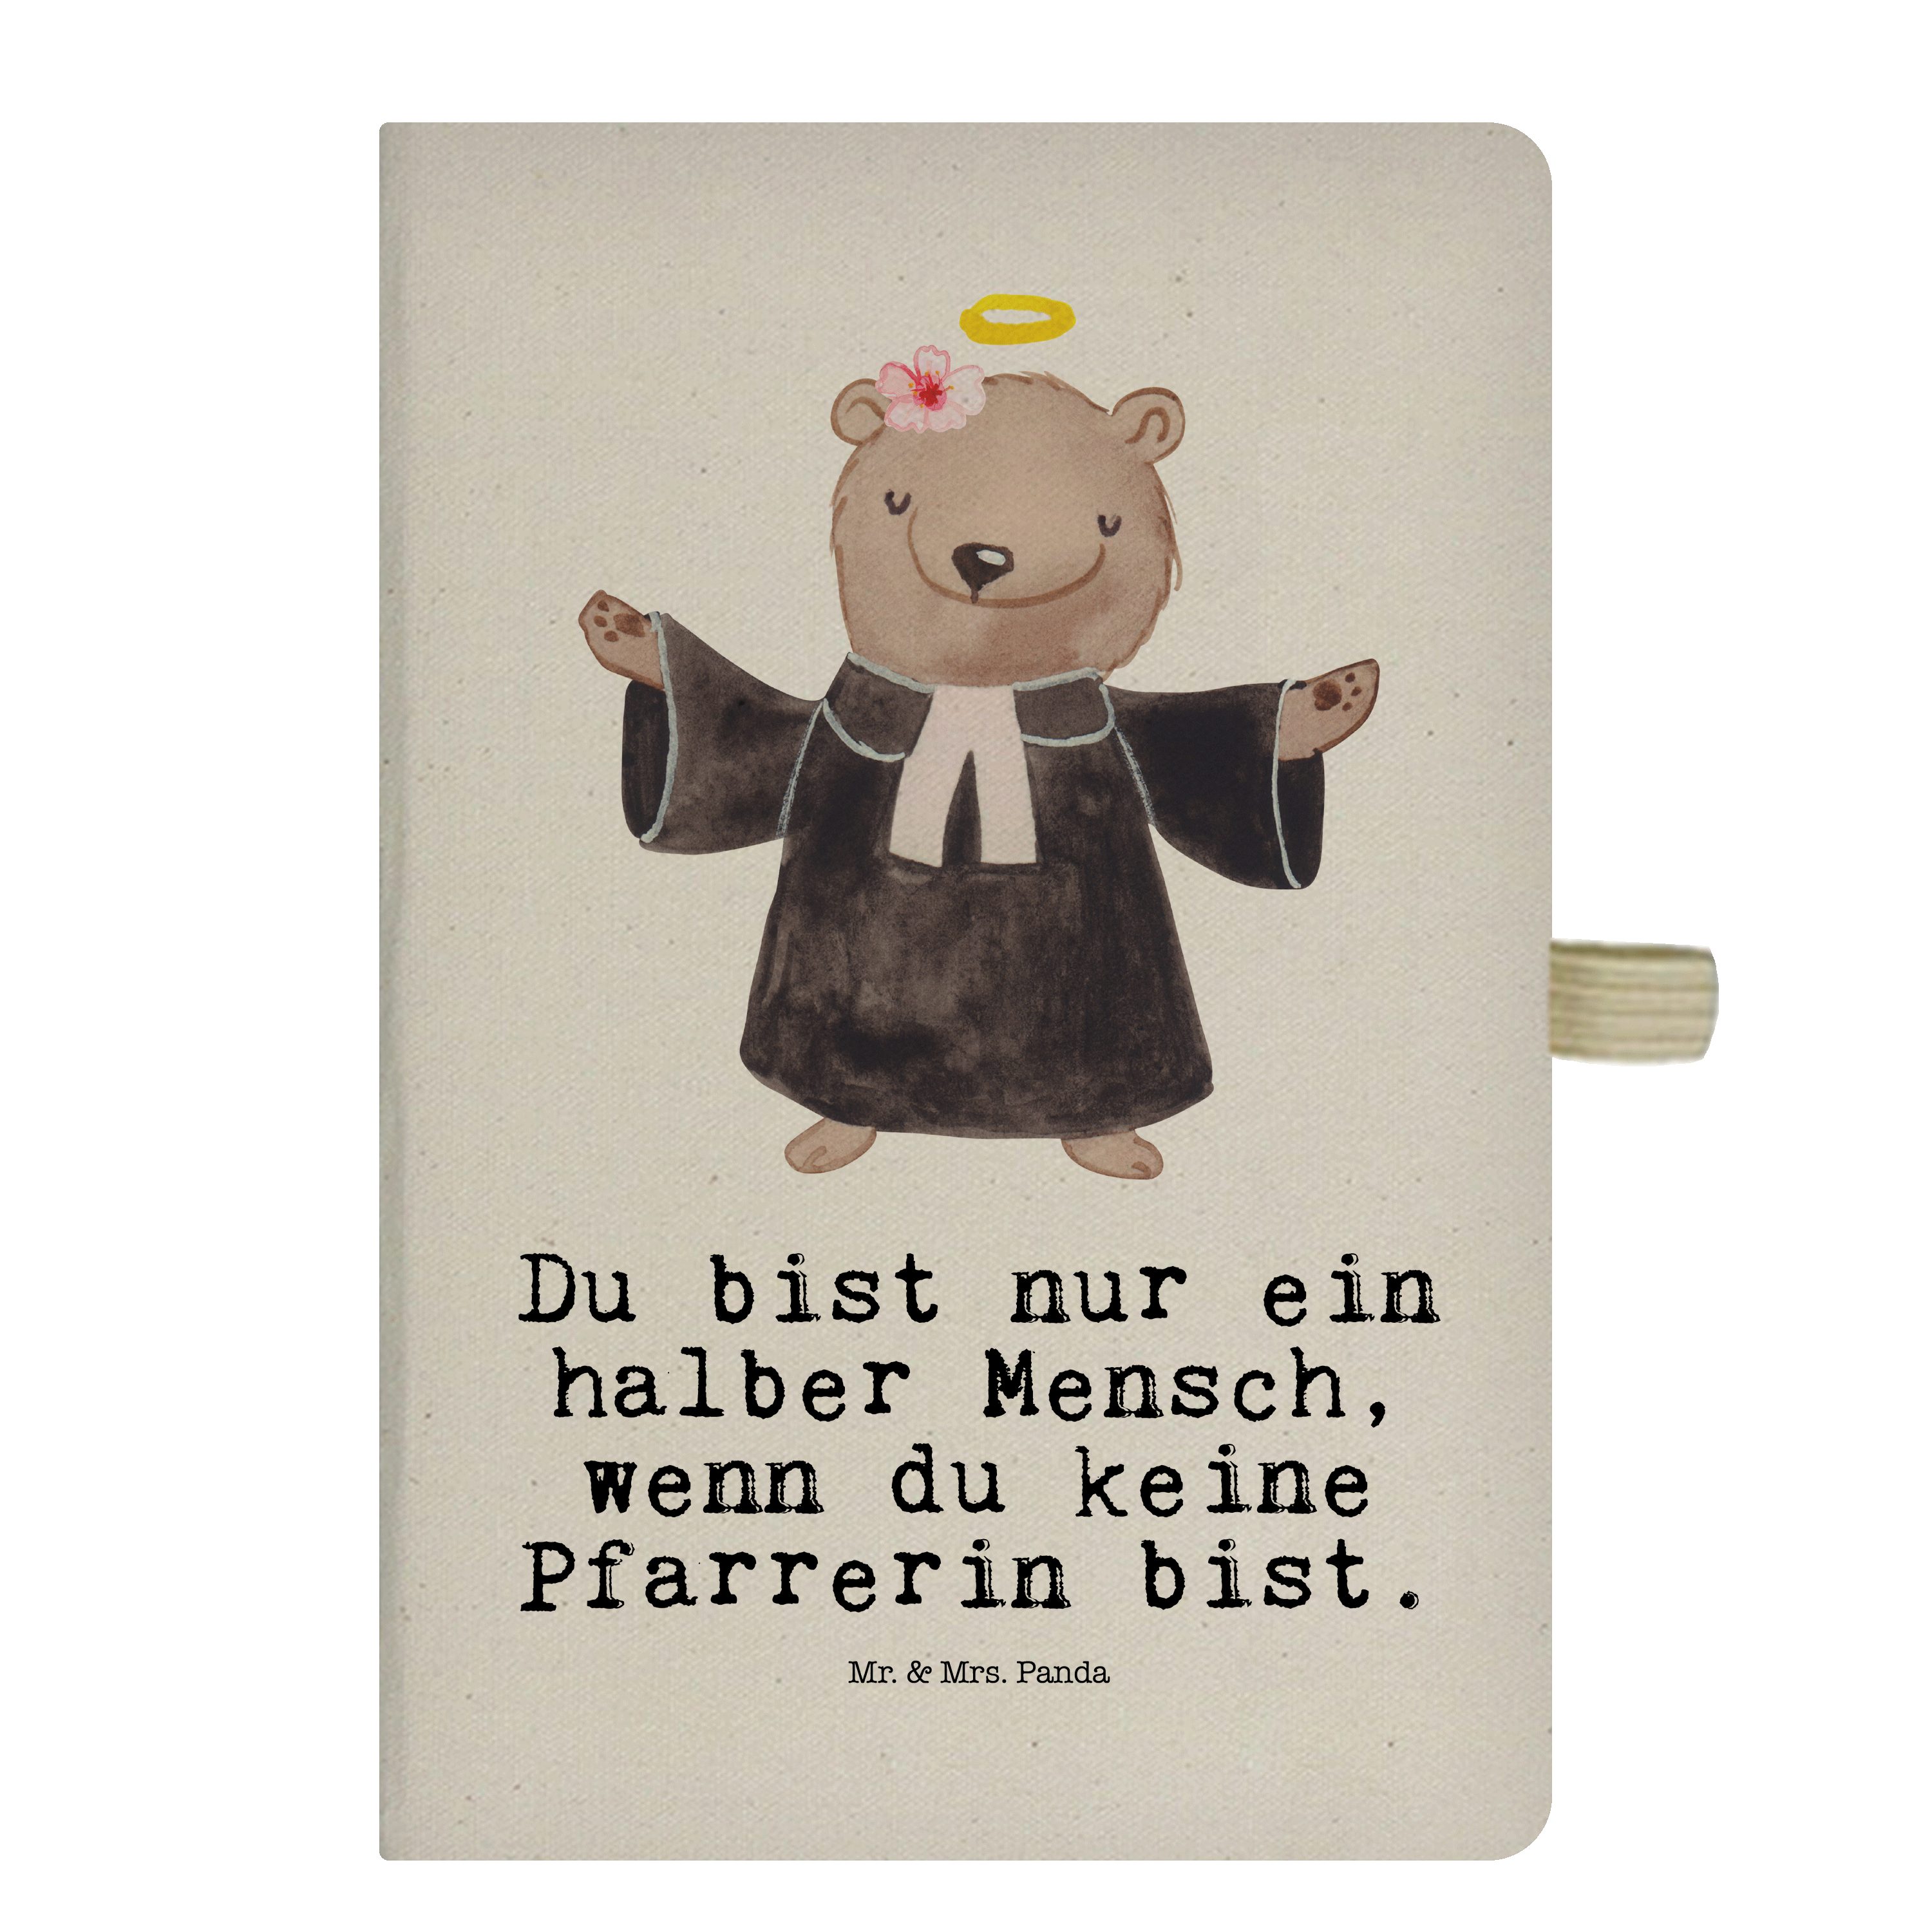 E Panda Mrs. Panda Geschenk, Priesterin, Notizbuch - & Predigerin Mrs. Mr. & Transparent Pfarrerin Mr. - mit Herz